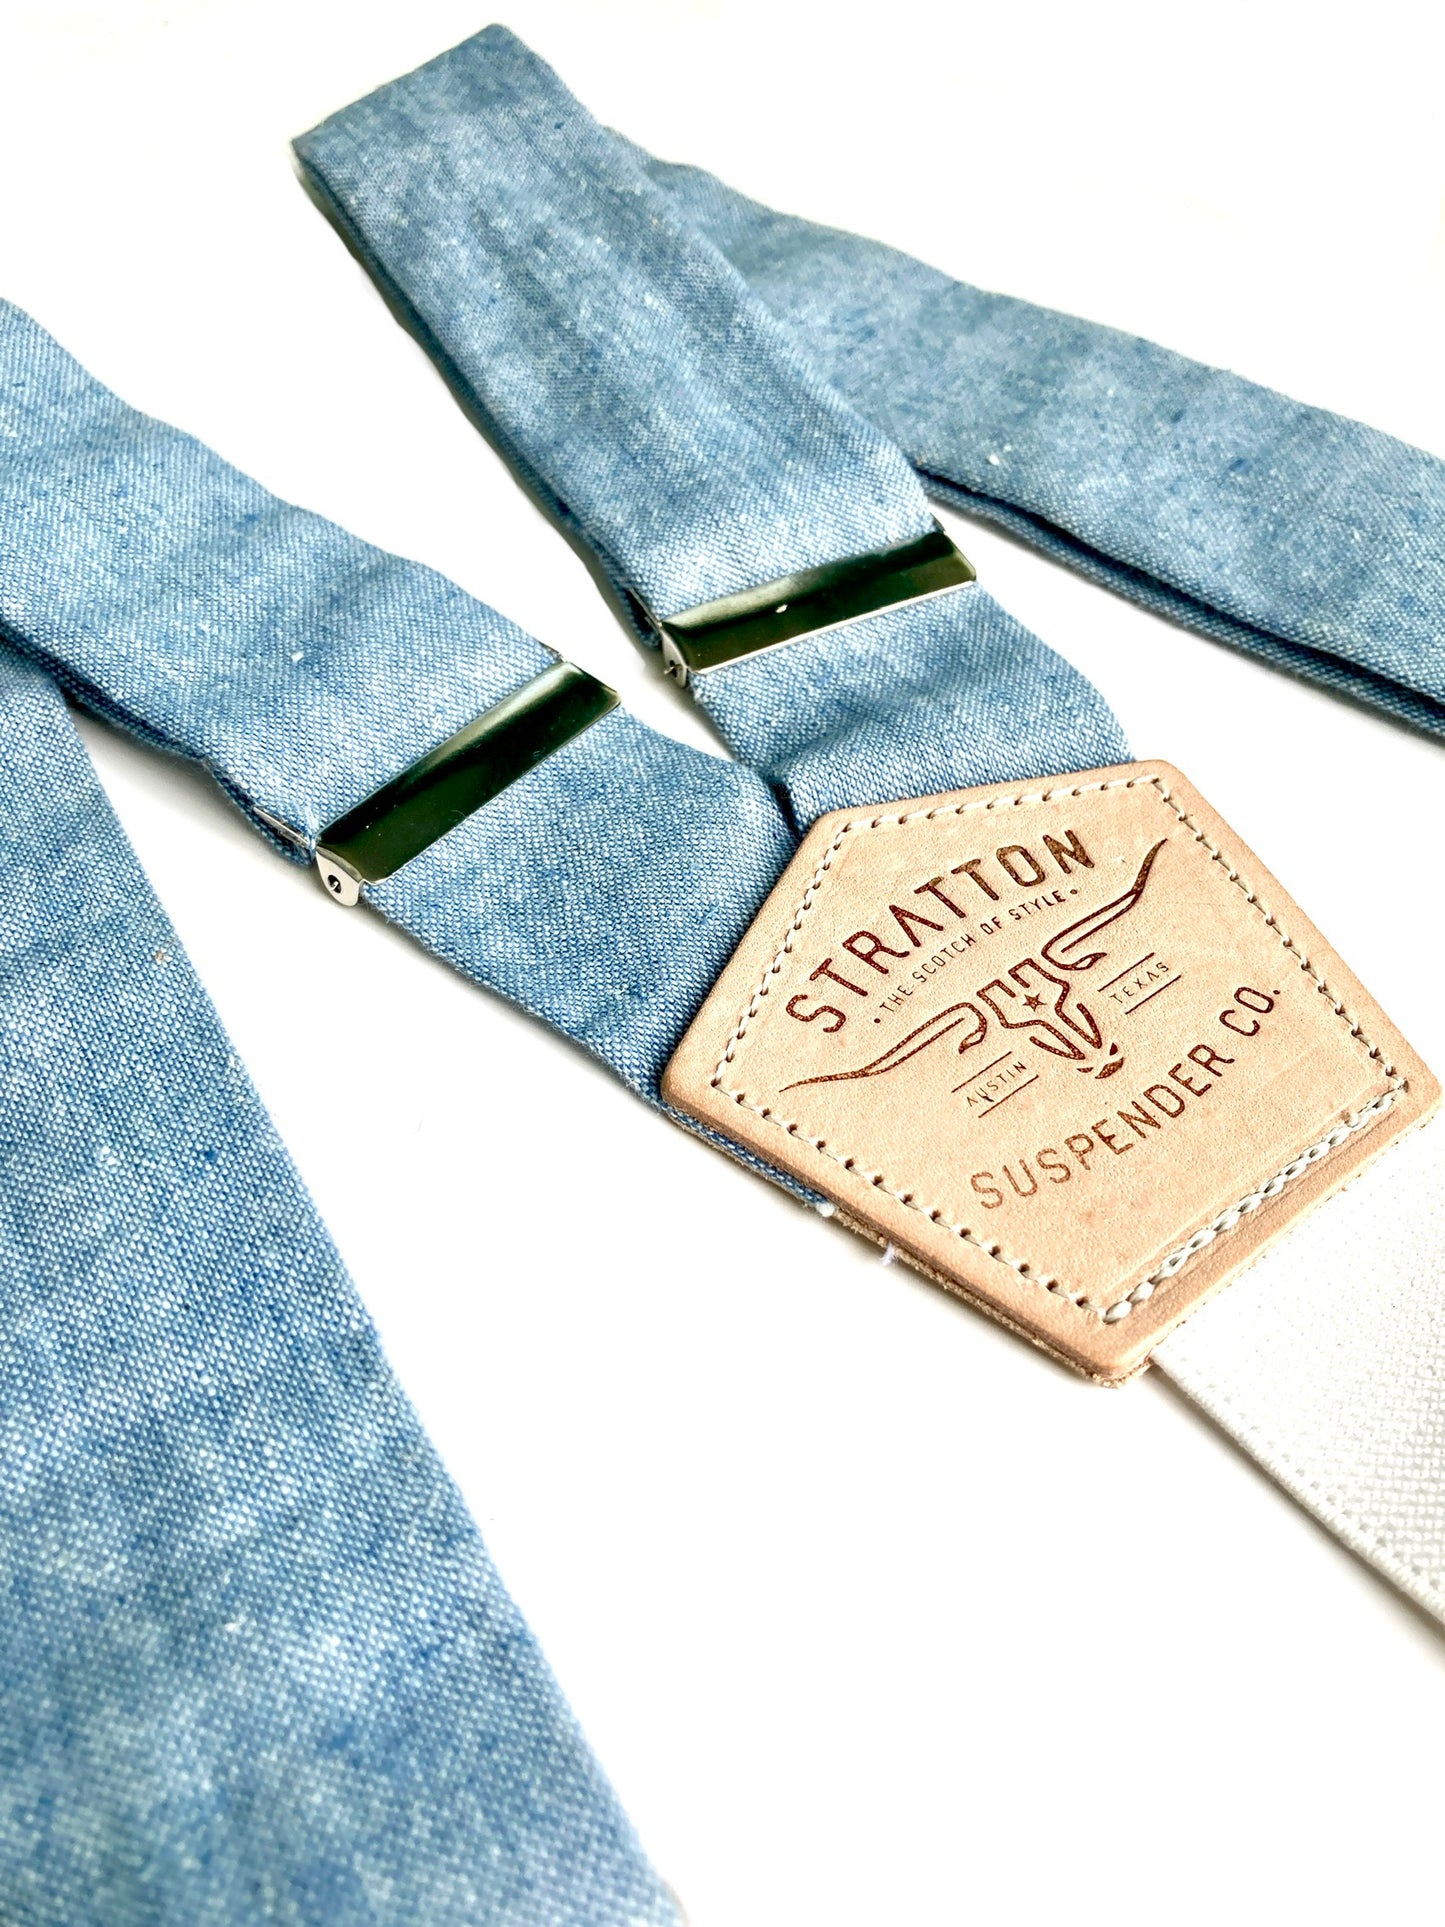 Stratton Suspender Co. Straps in Frio Blue Linen